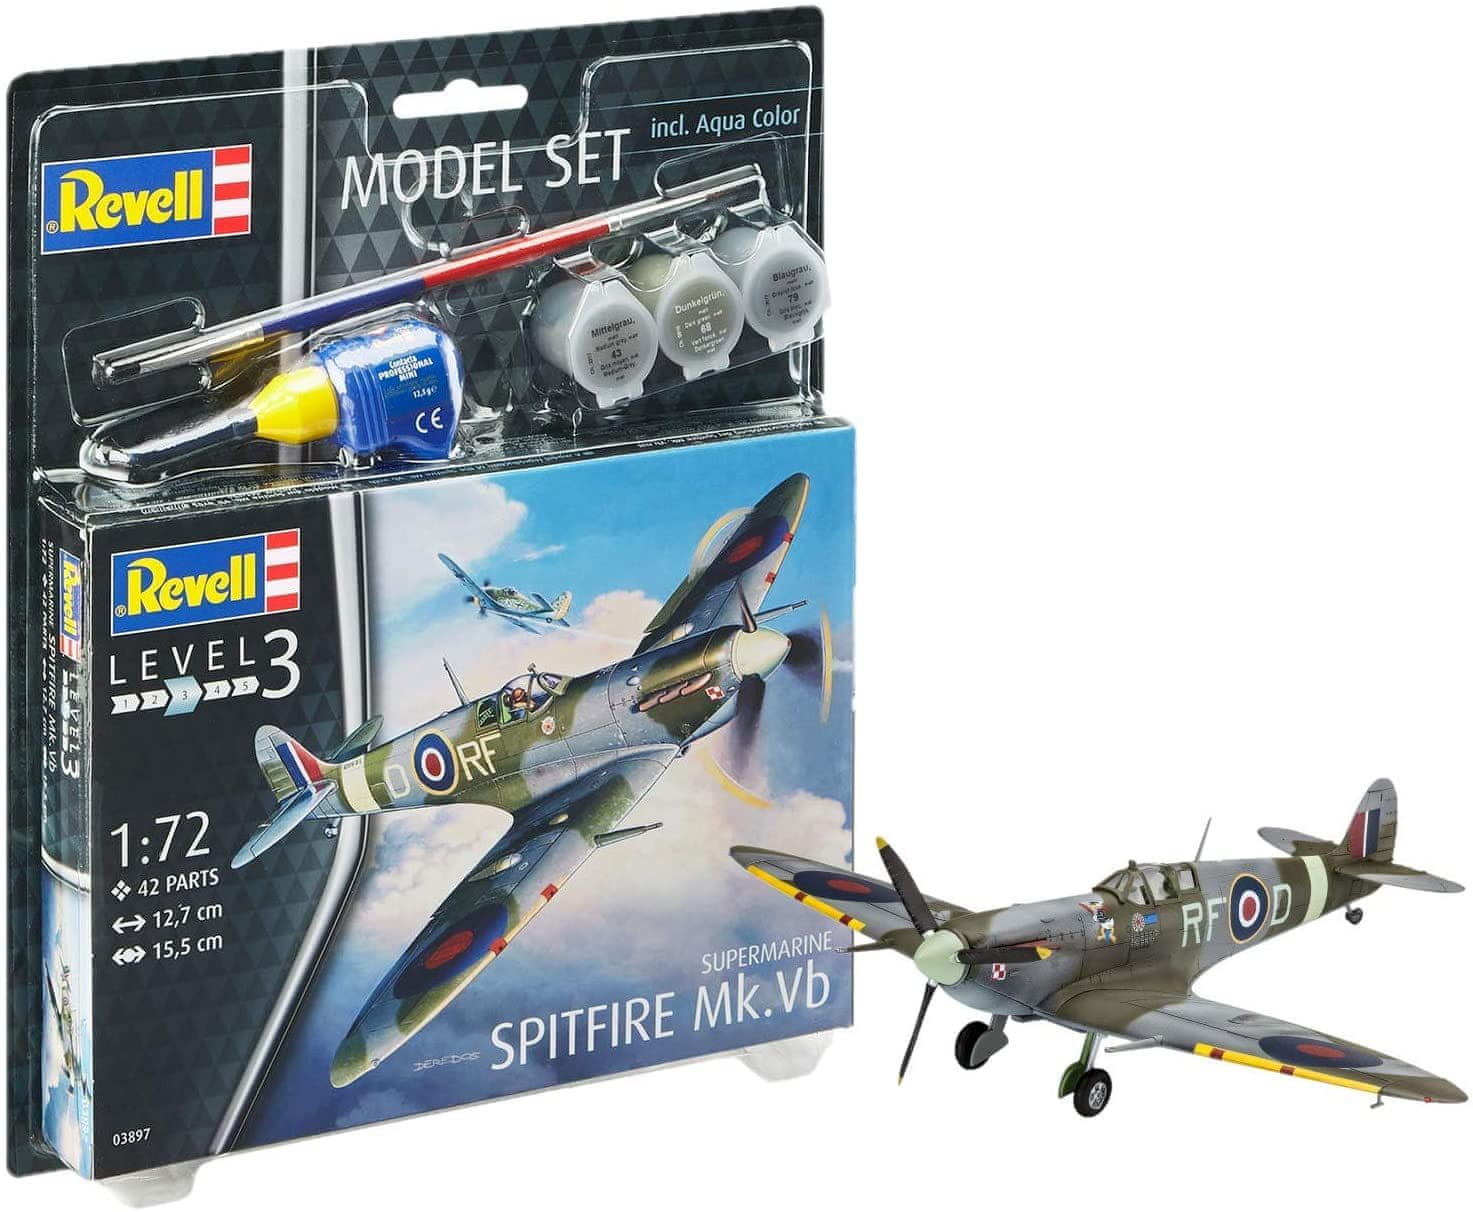 Maquette Revell Model Set Spitfire Mk. Vb chez 1001hobbies (Réf.63897)